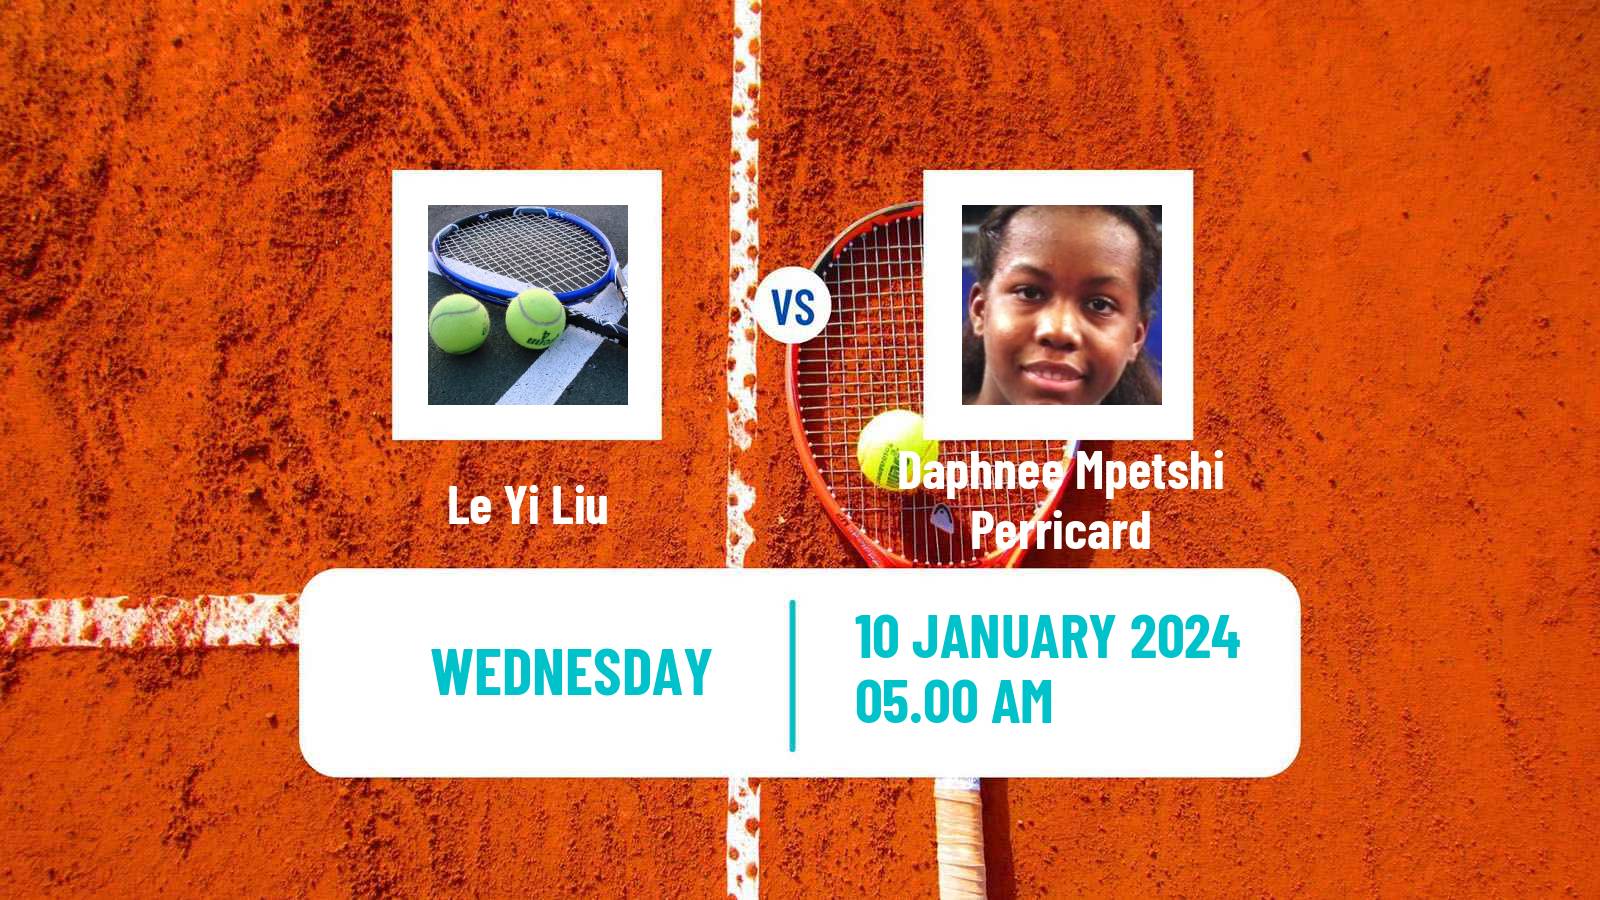 Tennis ITF W15 Monastir 2 Women Le Yi Liu - Daphnee Mpetshi Perricard